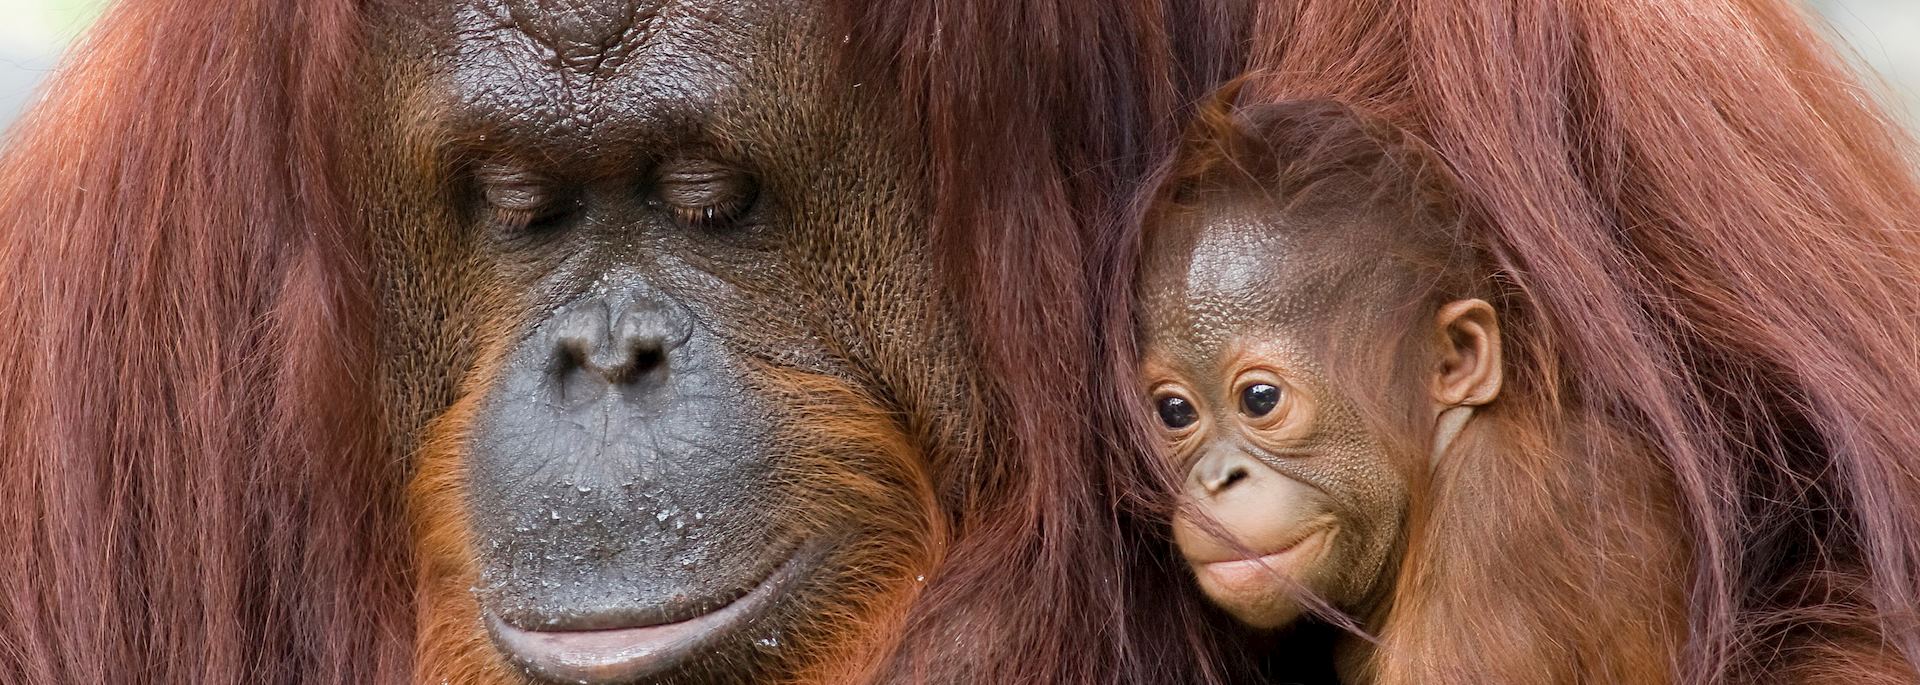 Female orangutan and infant